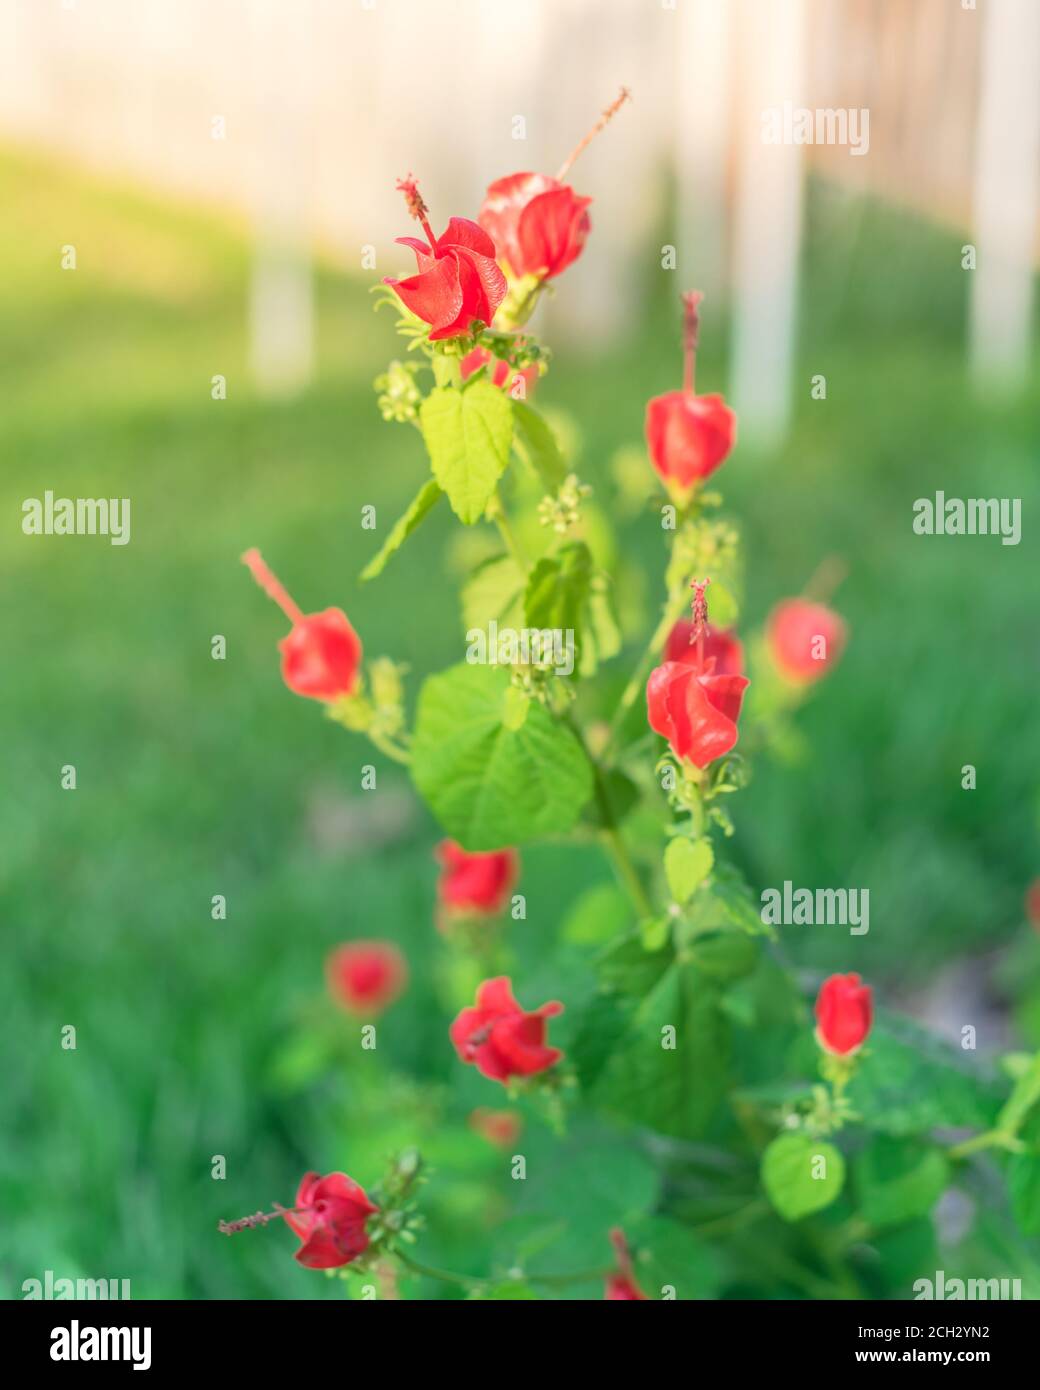 Red Turk's cap or Malvaviscus arboreus flowers with blurry fence in background Stock Photo